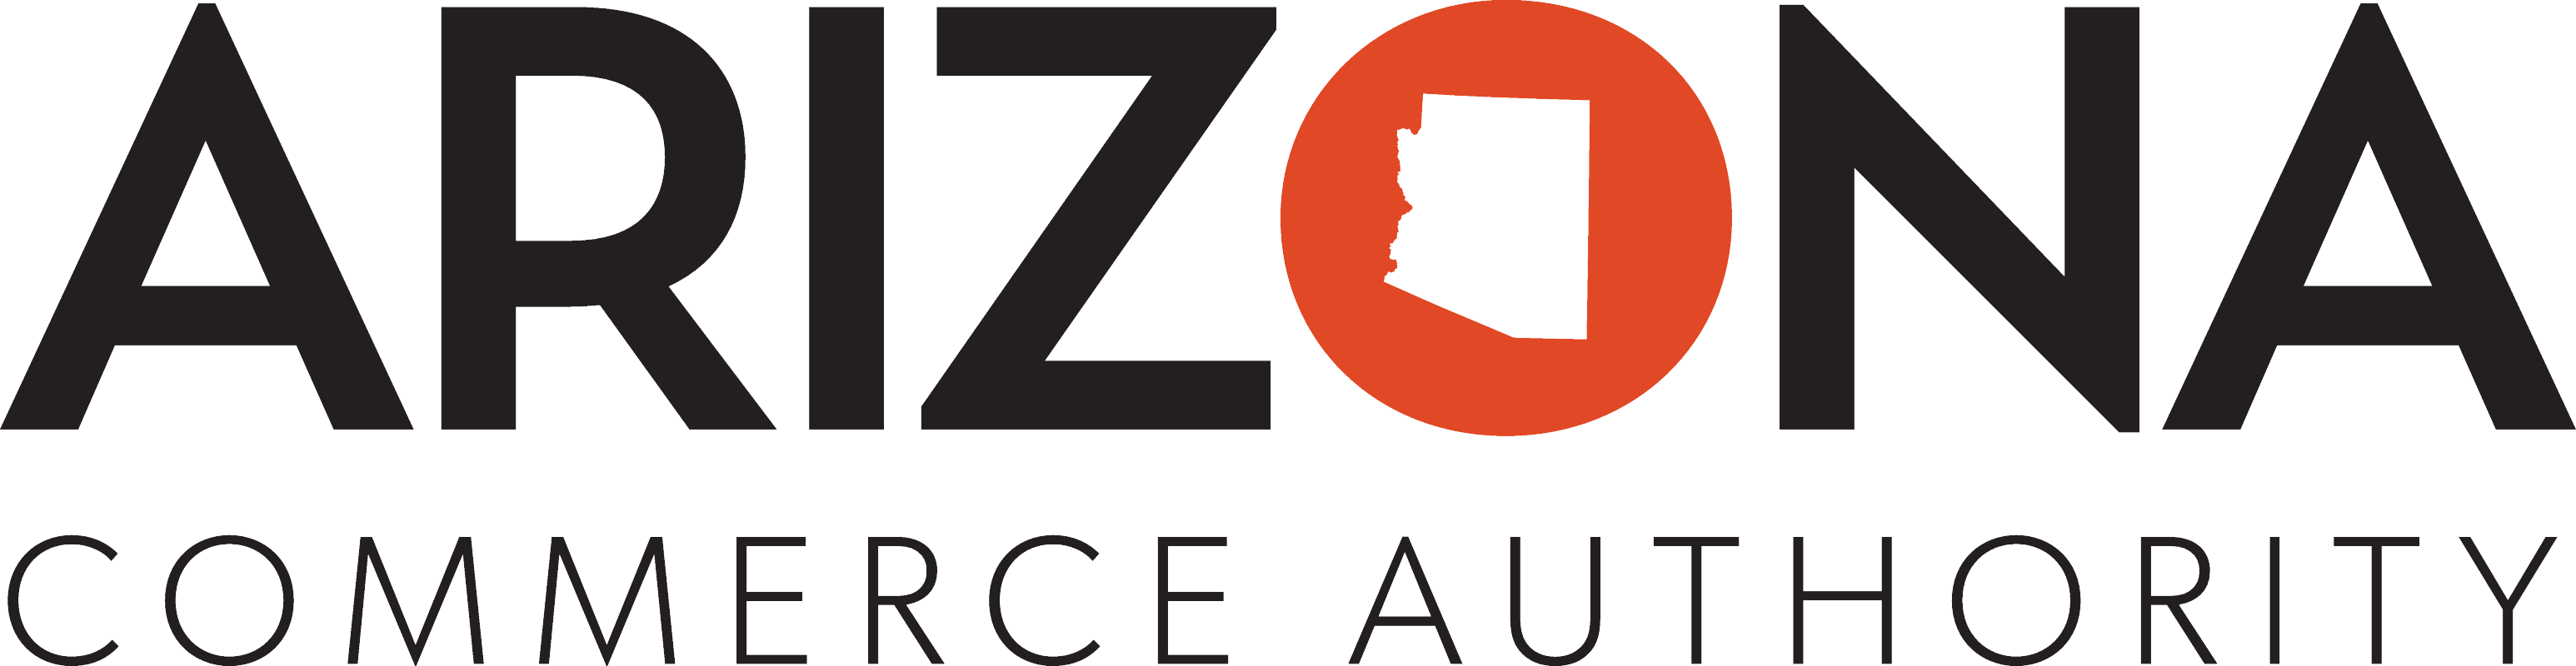 Arizona Commerce Authority Logo